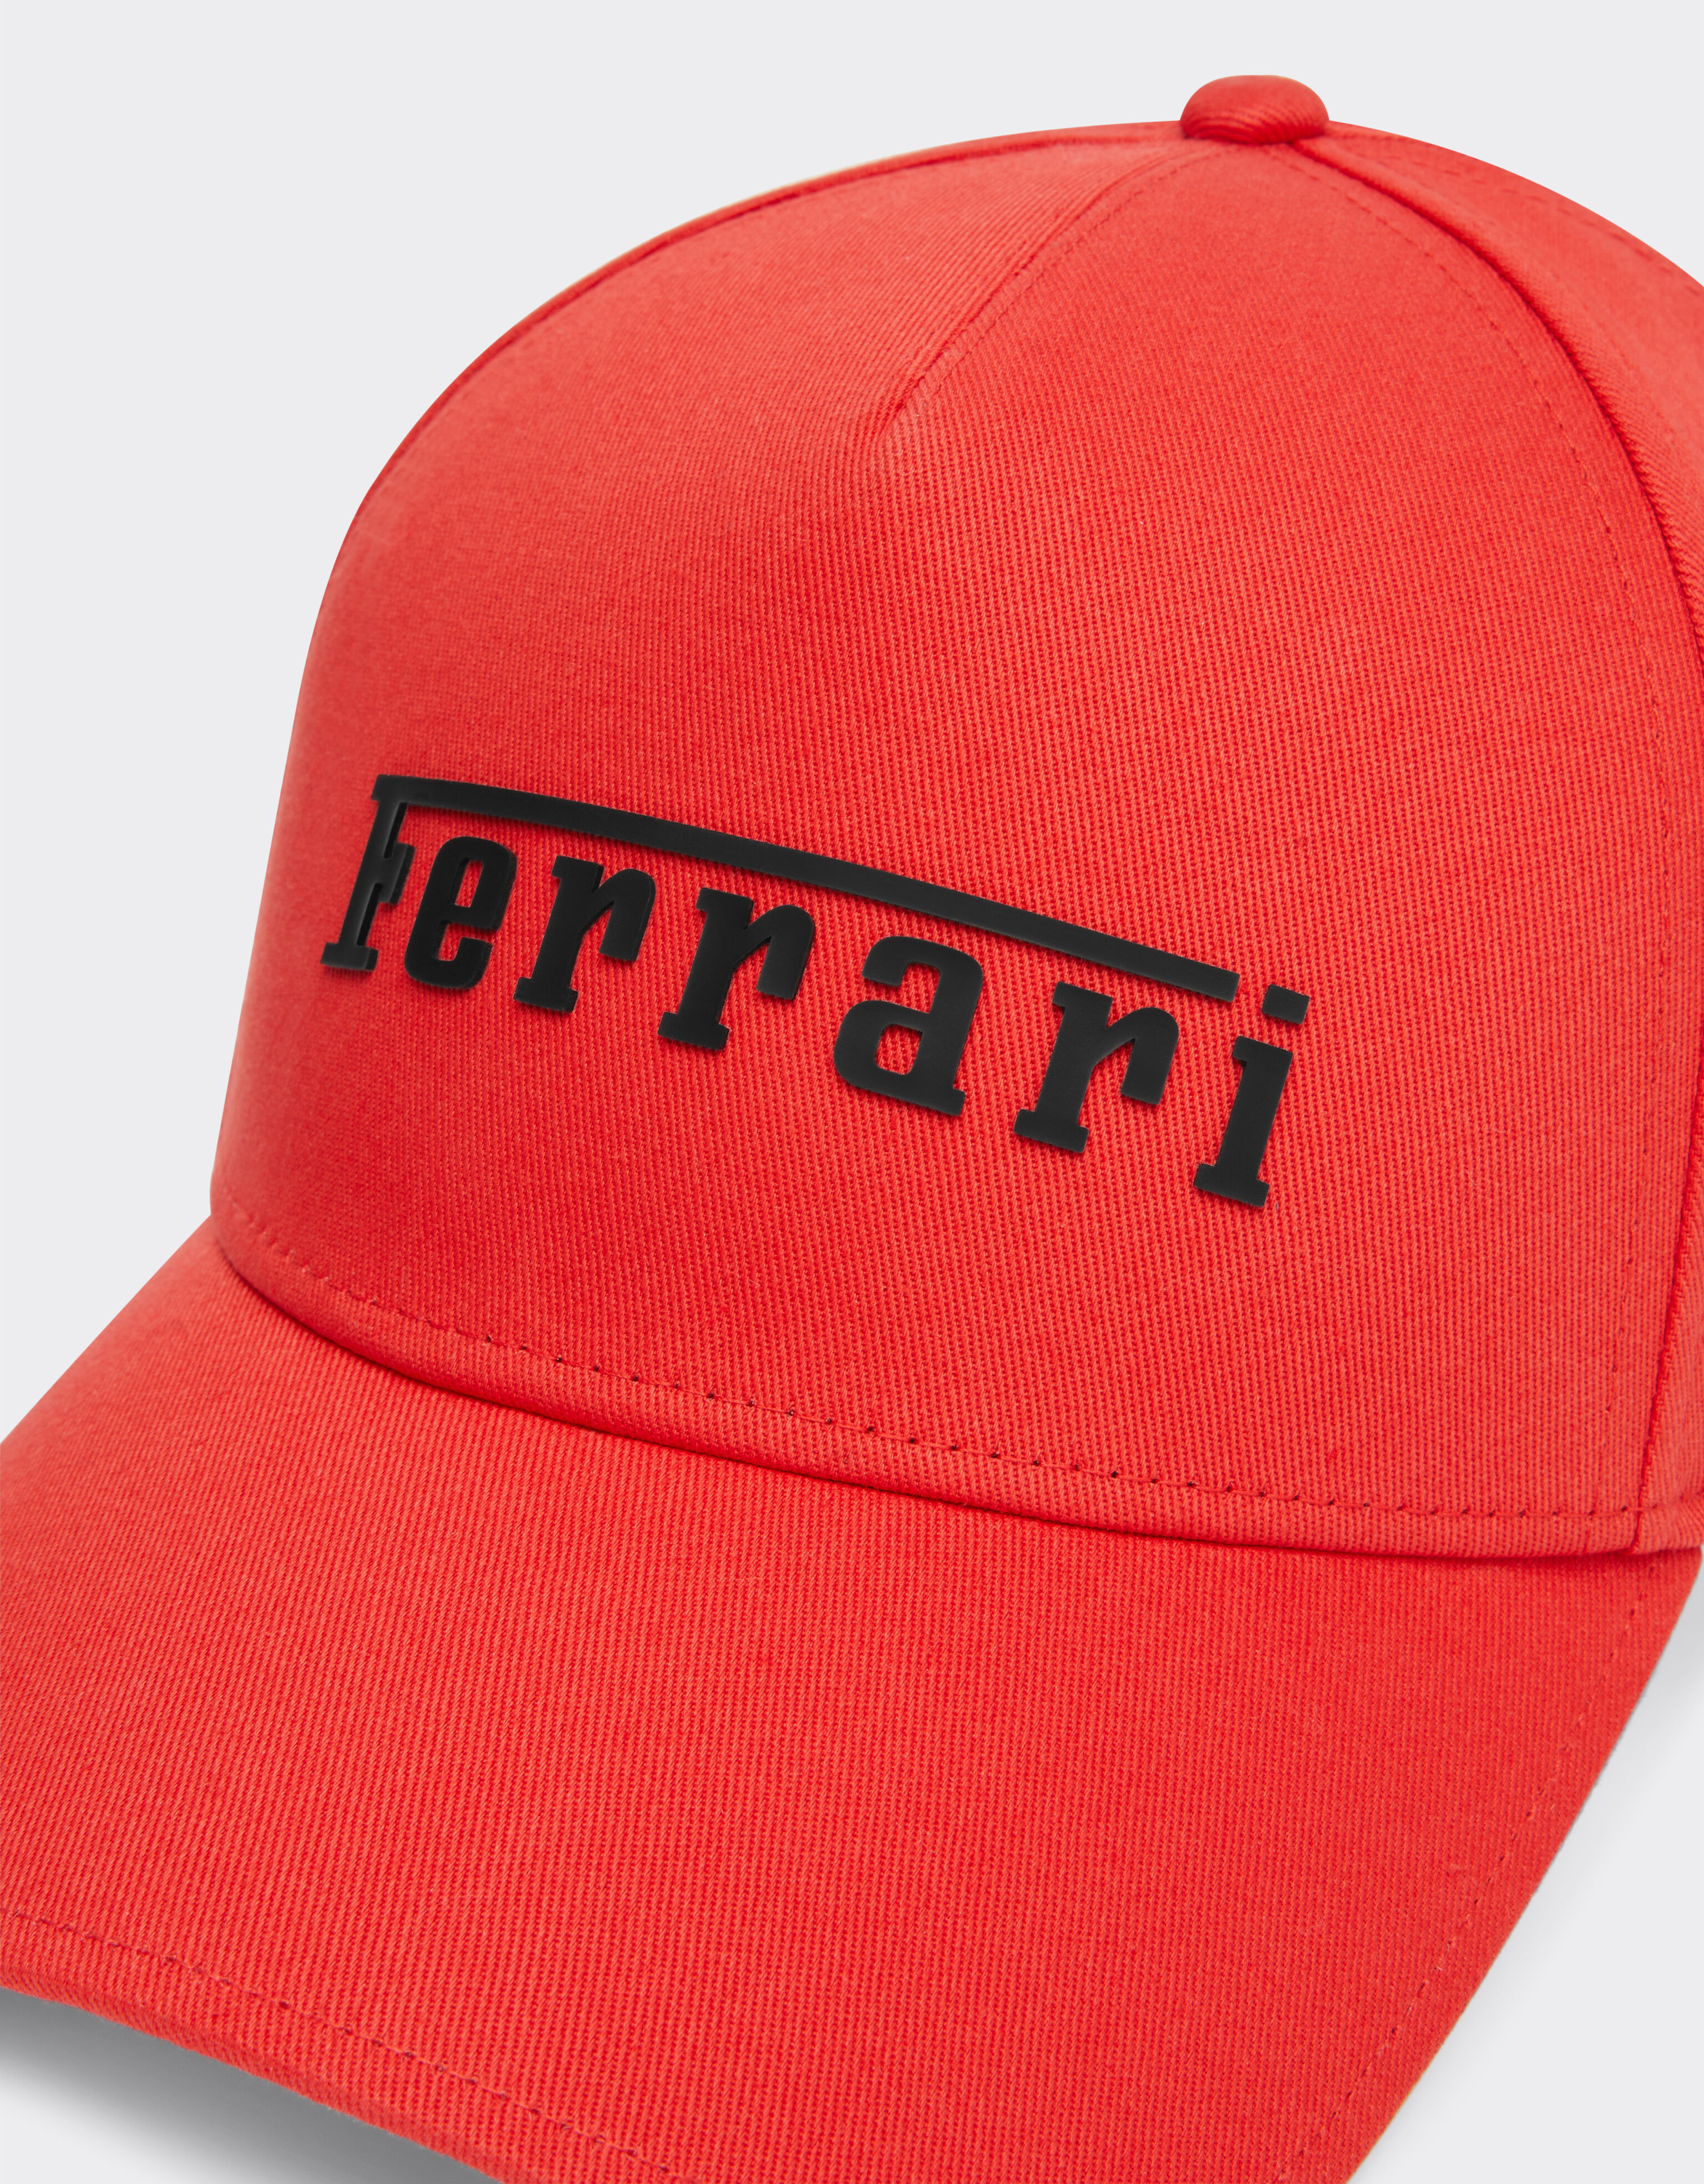 Ferrari Baseball hat with rubberised logo Rosso Corsa 红色 20403f